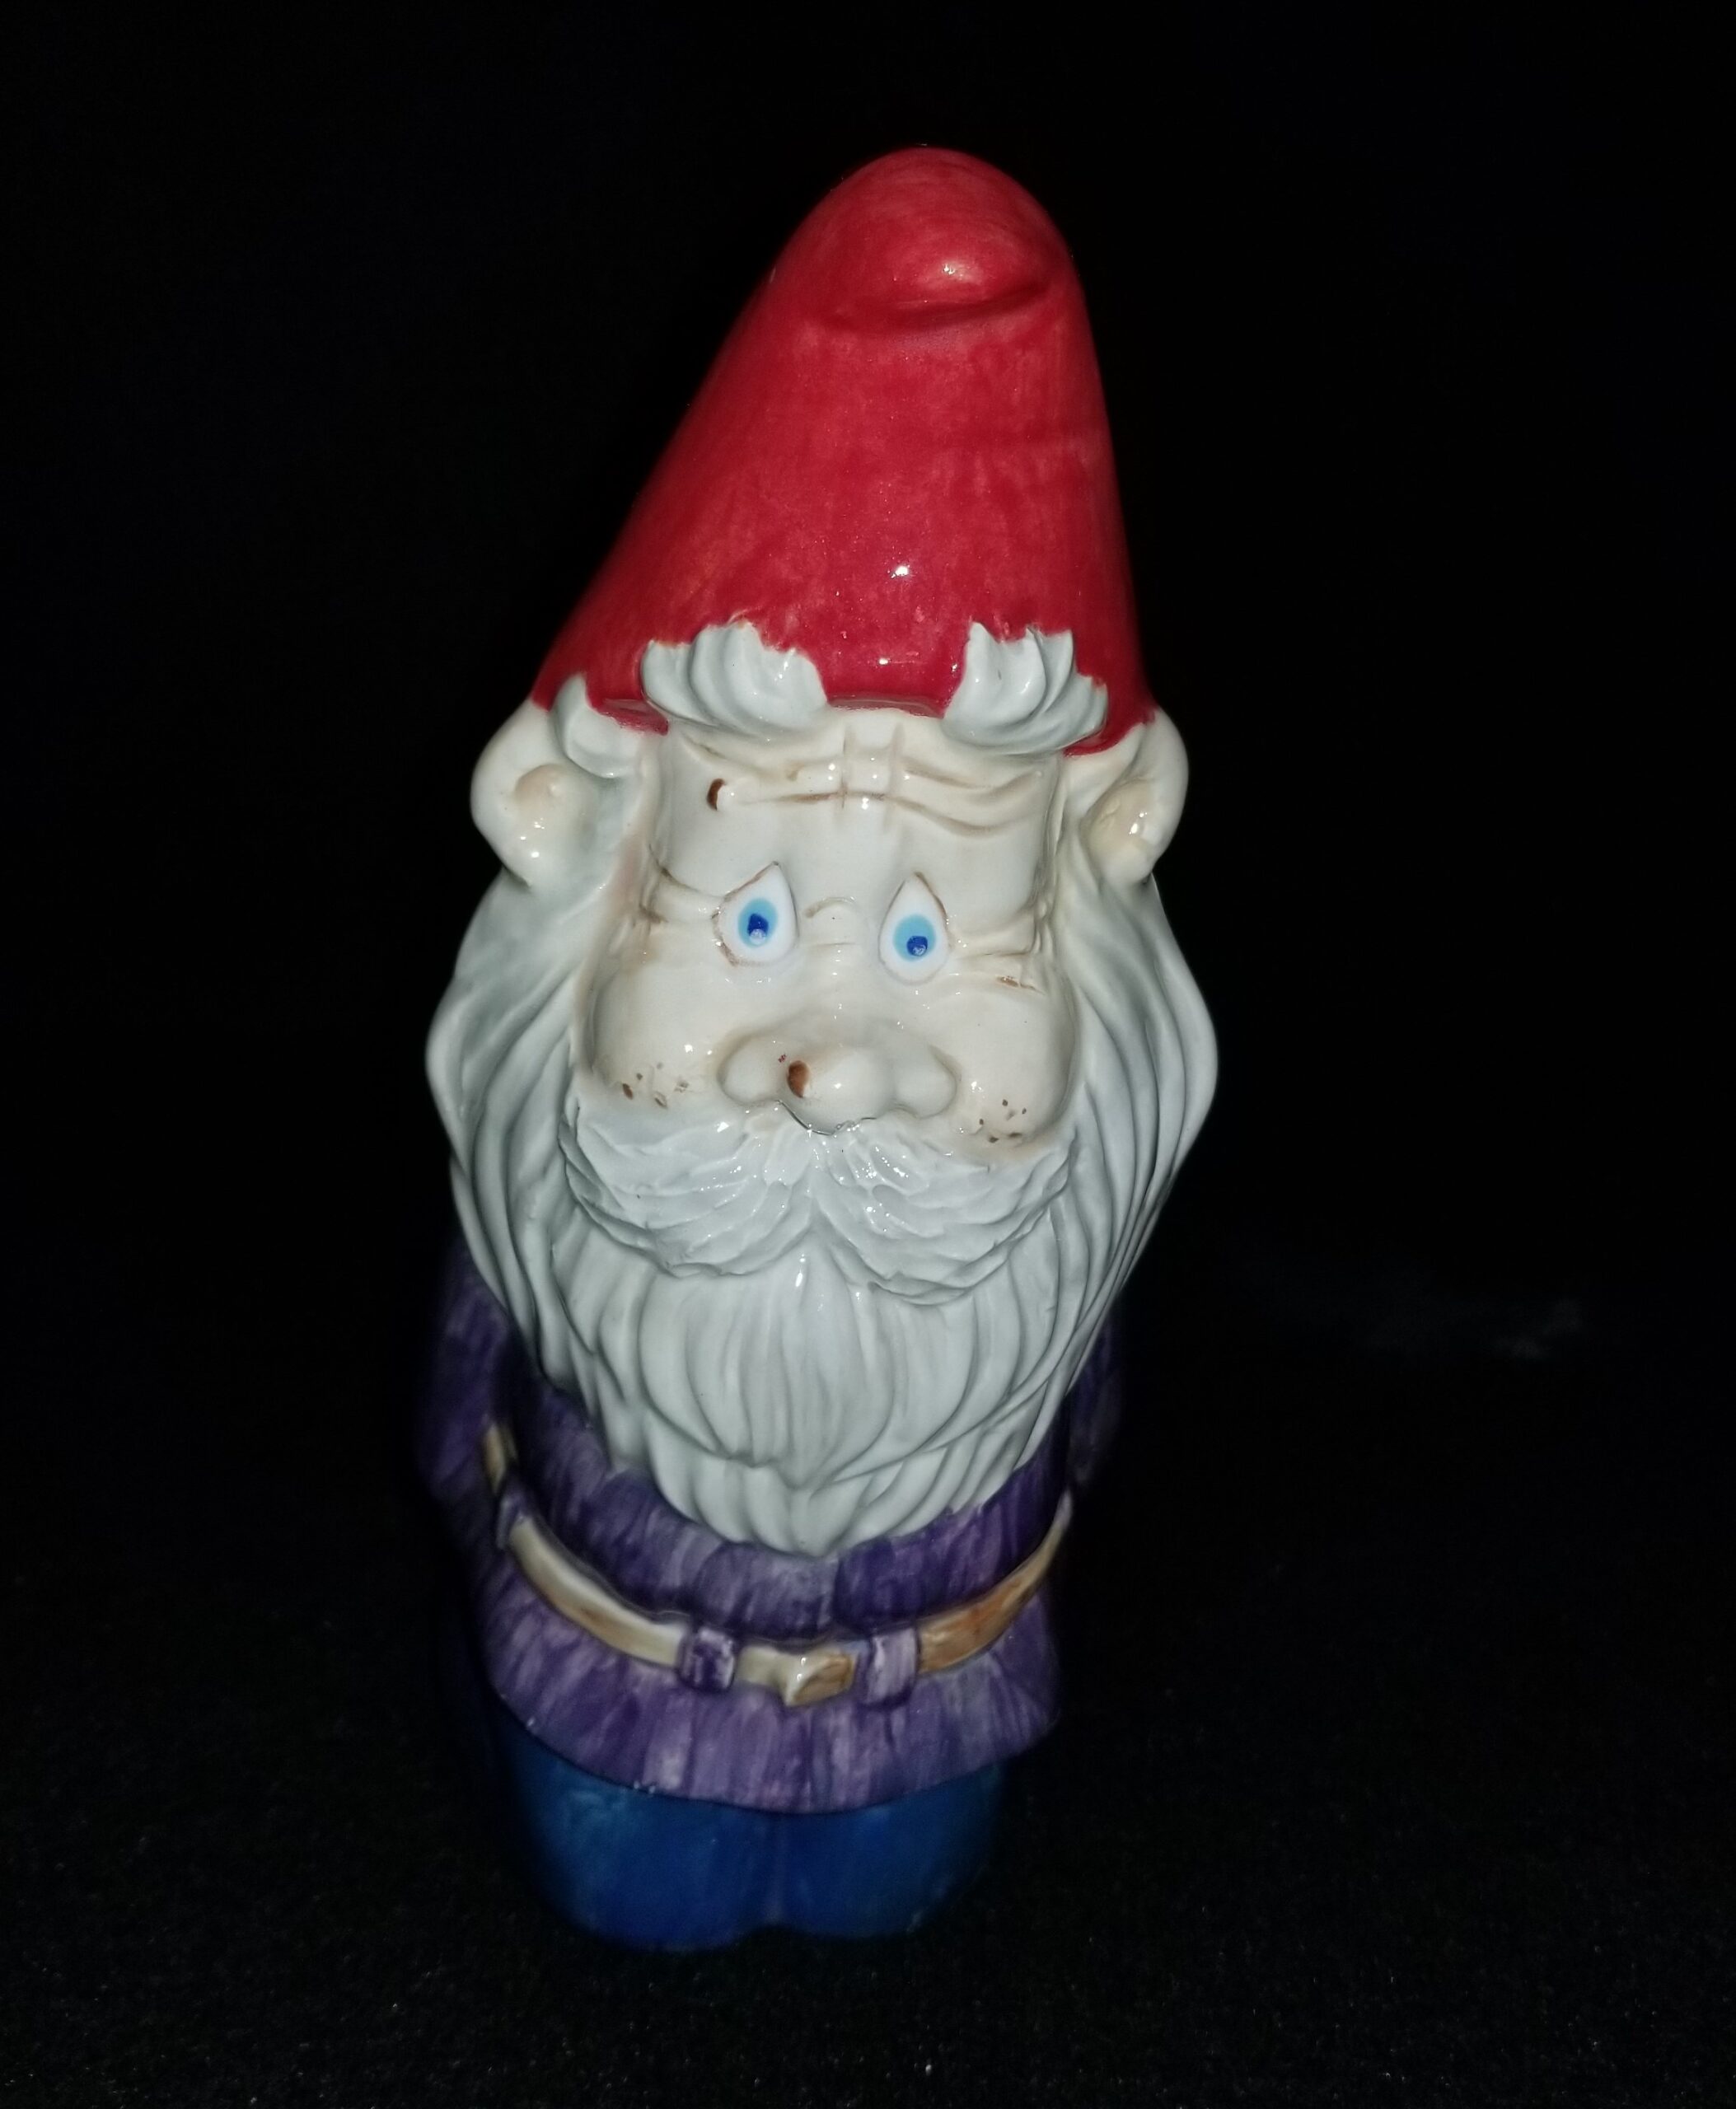 Gnome wine caddy - no bottle